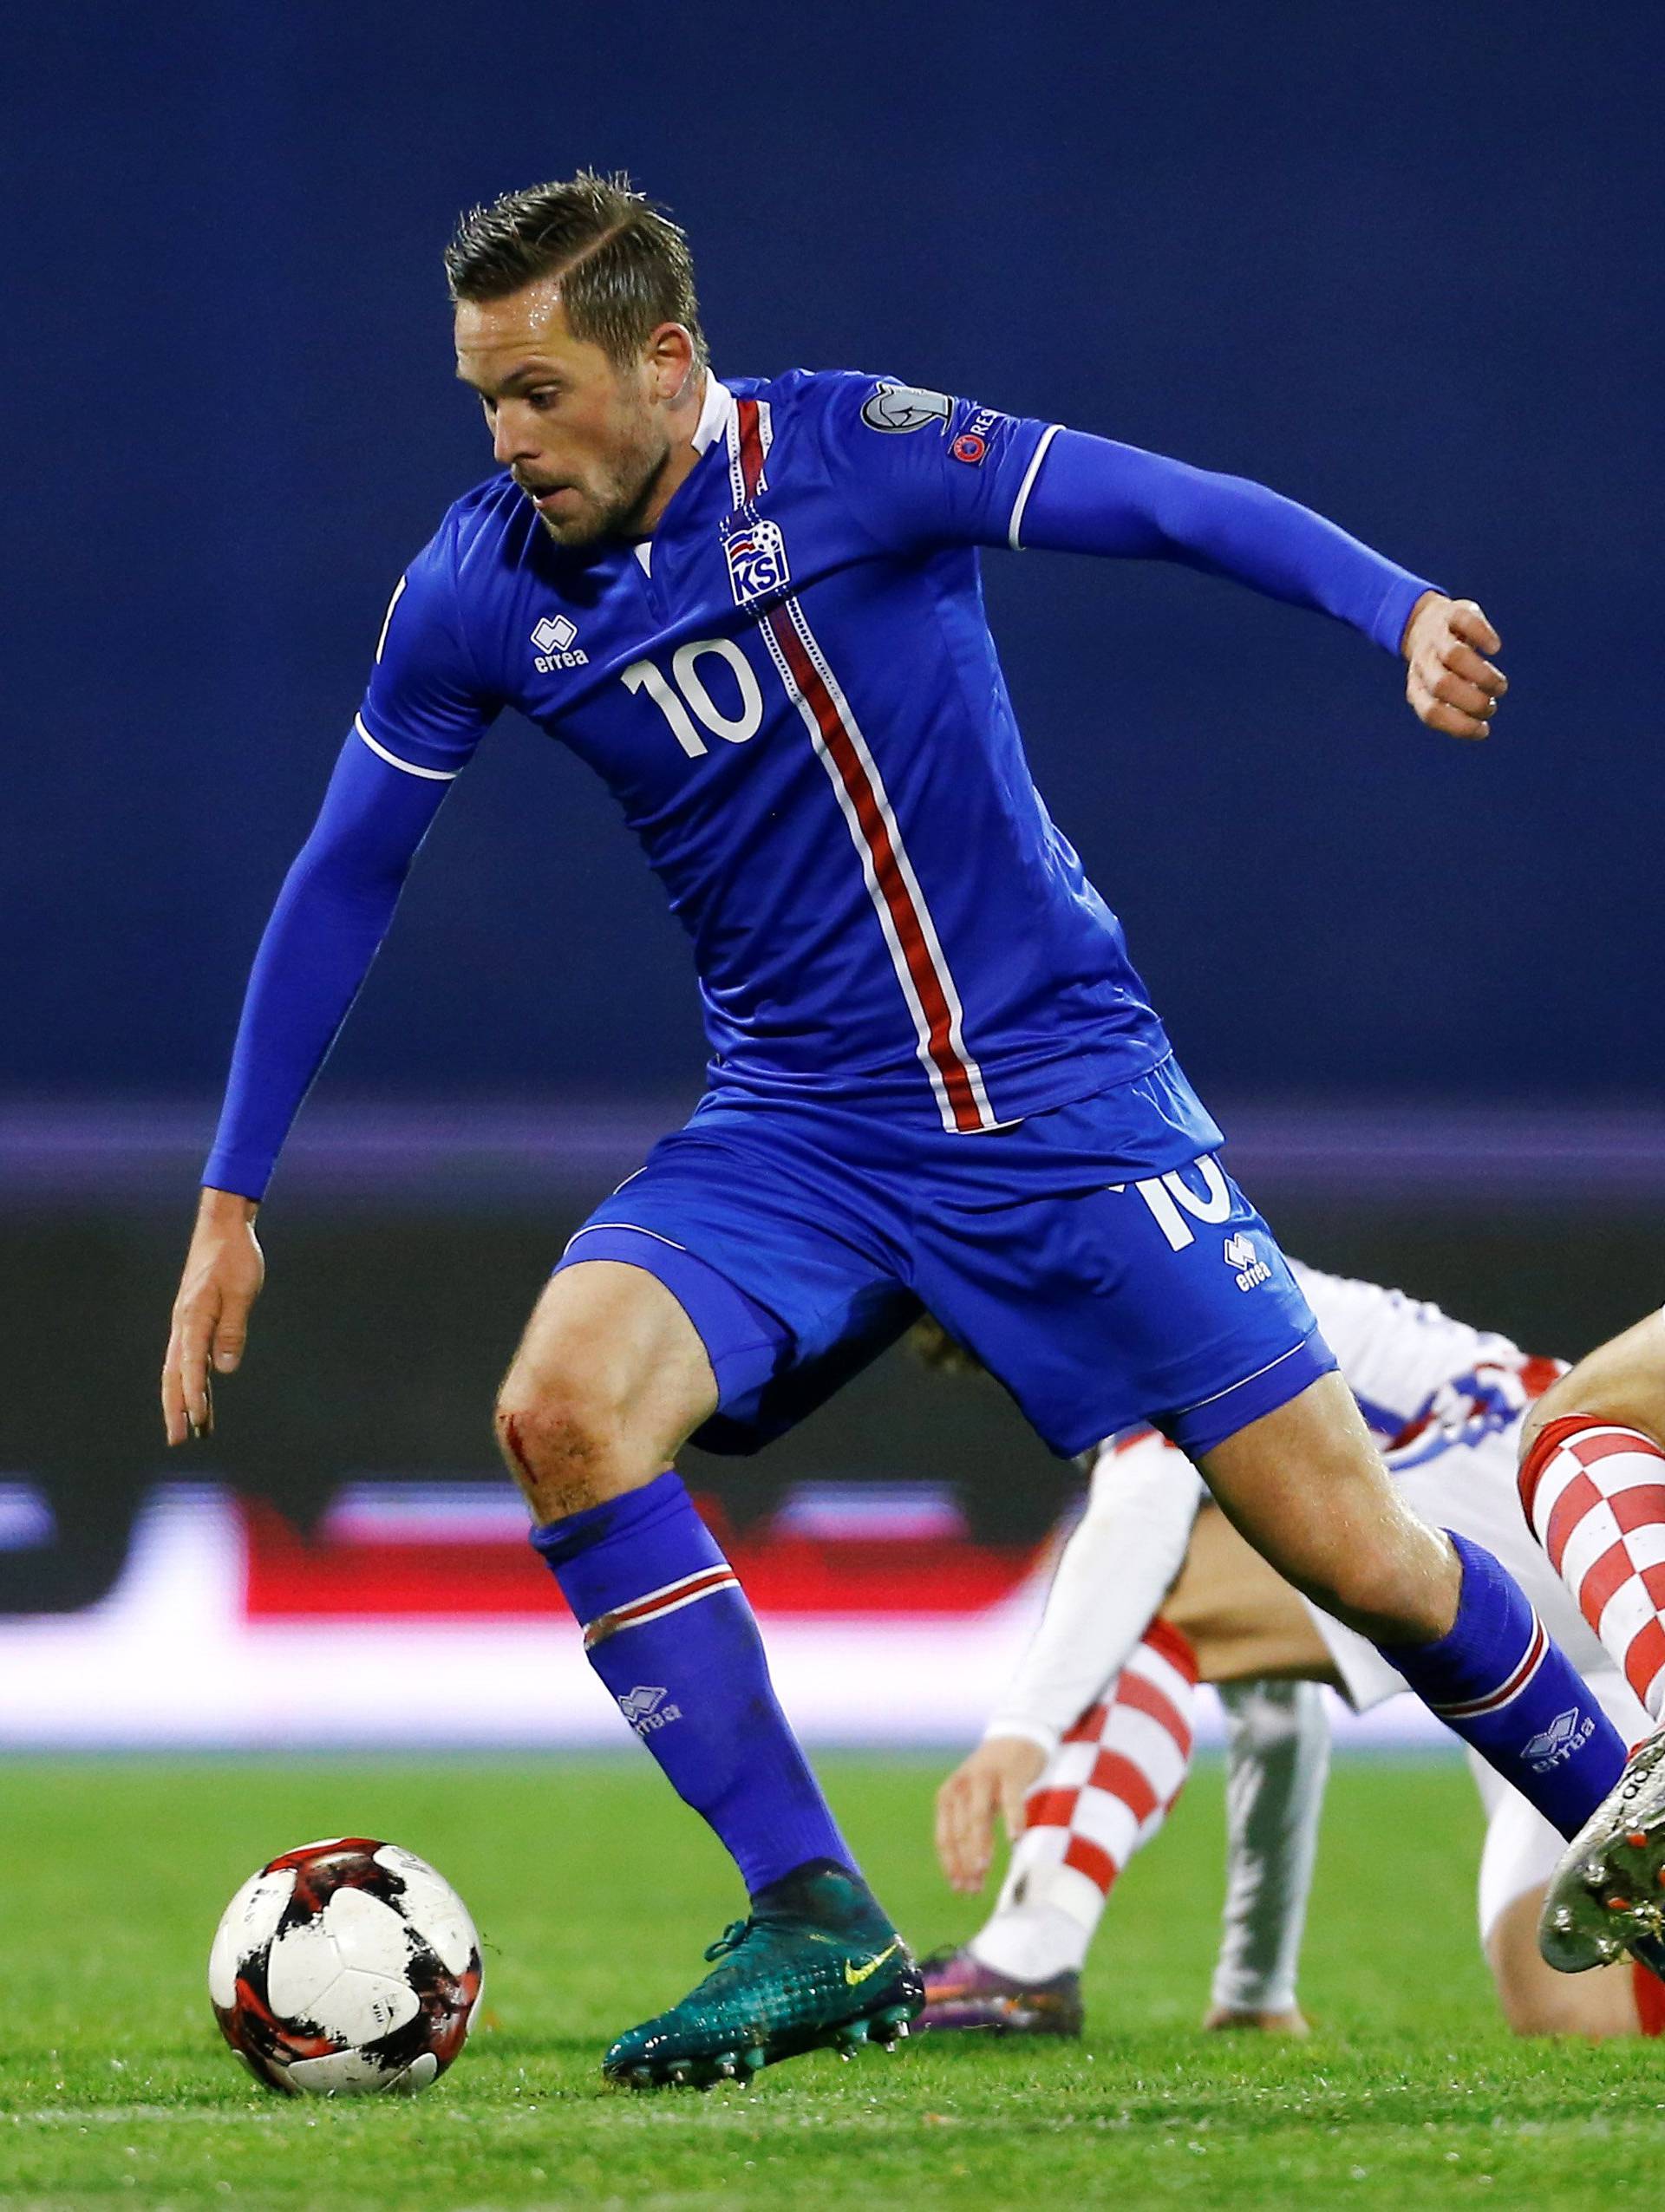 FILE PHOTO: Coratia v Iceland - 2018 World Cup Qualifying European Zone